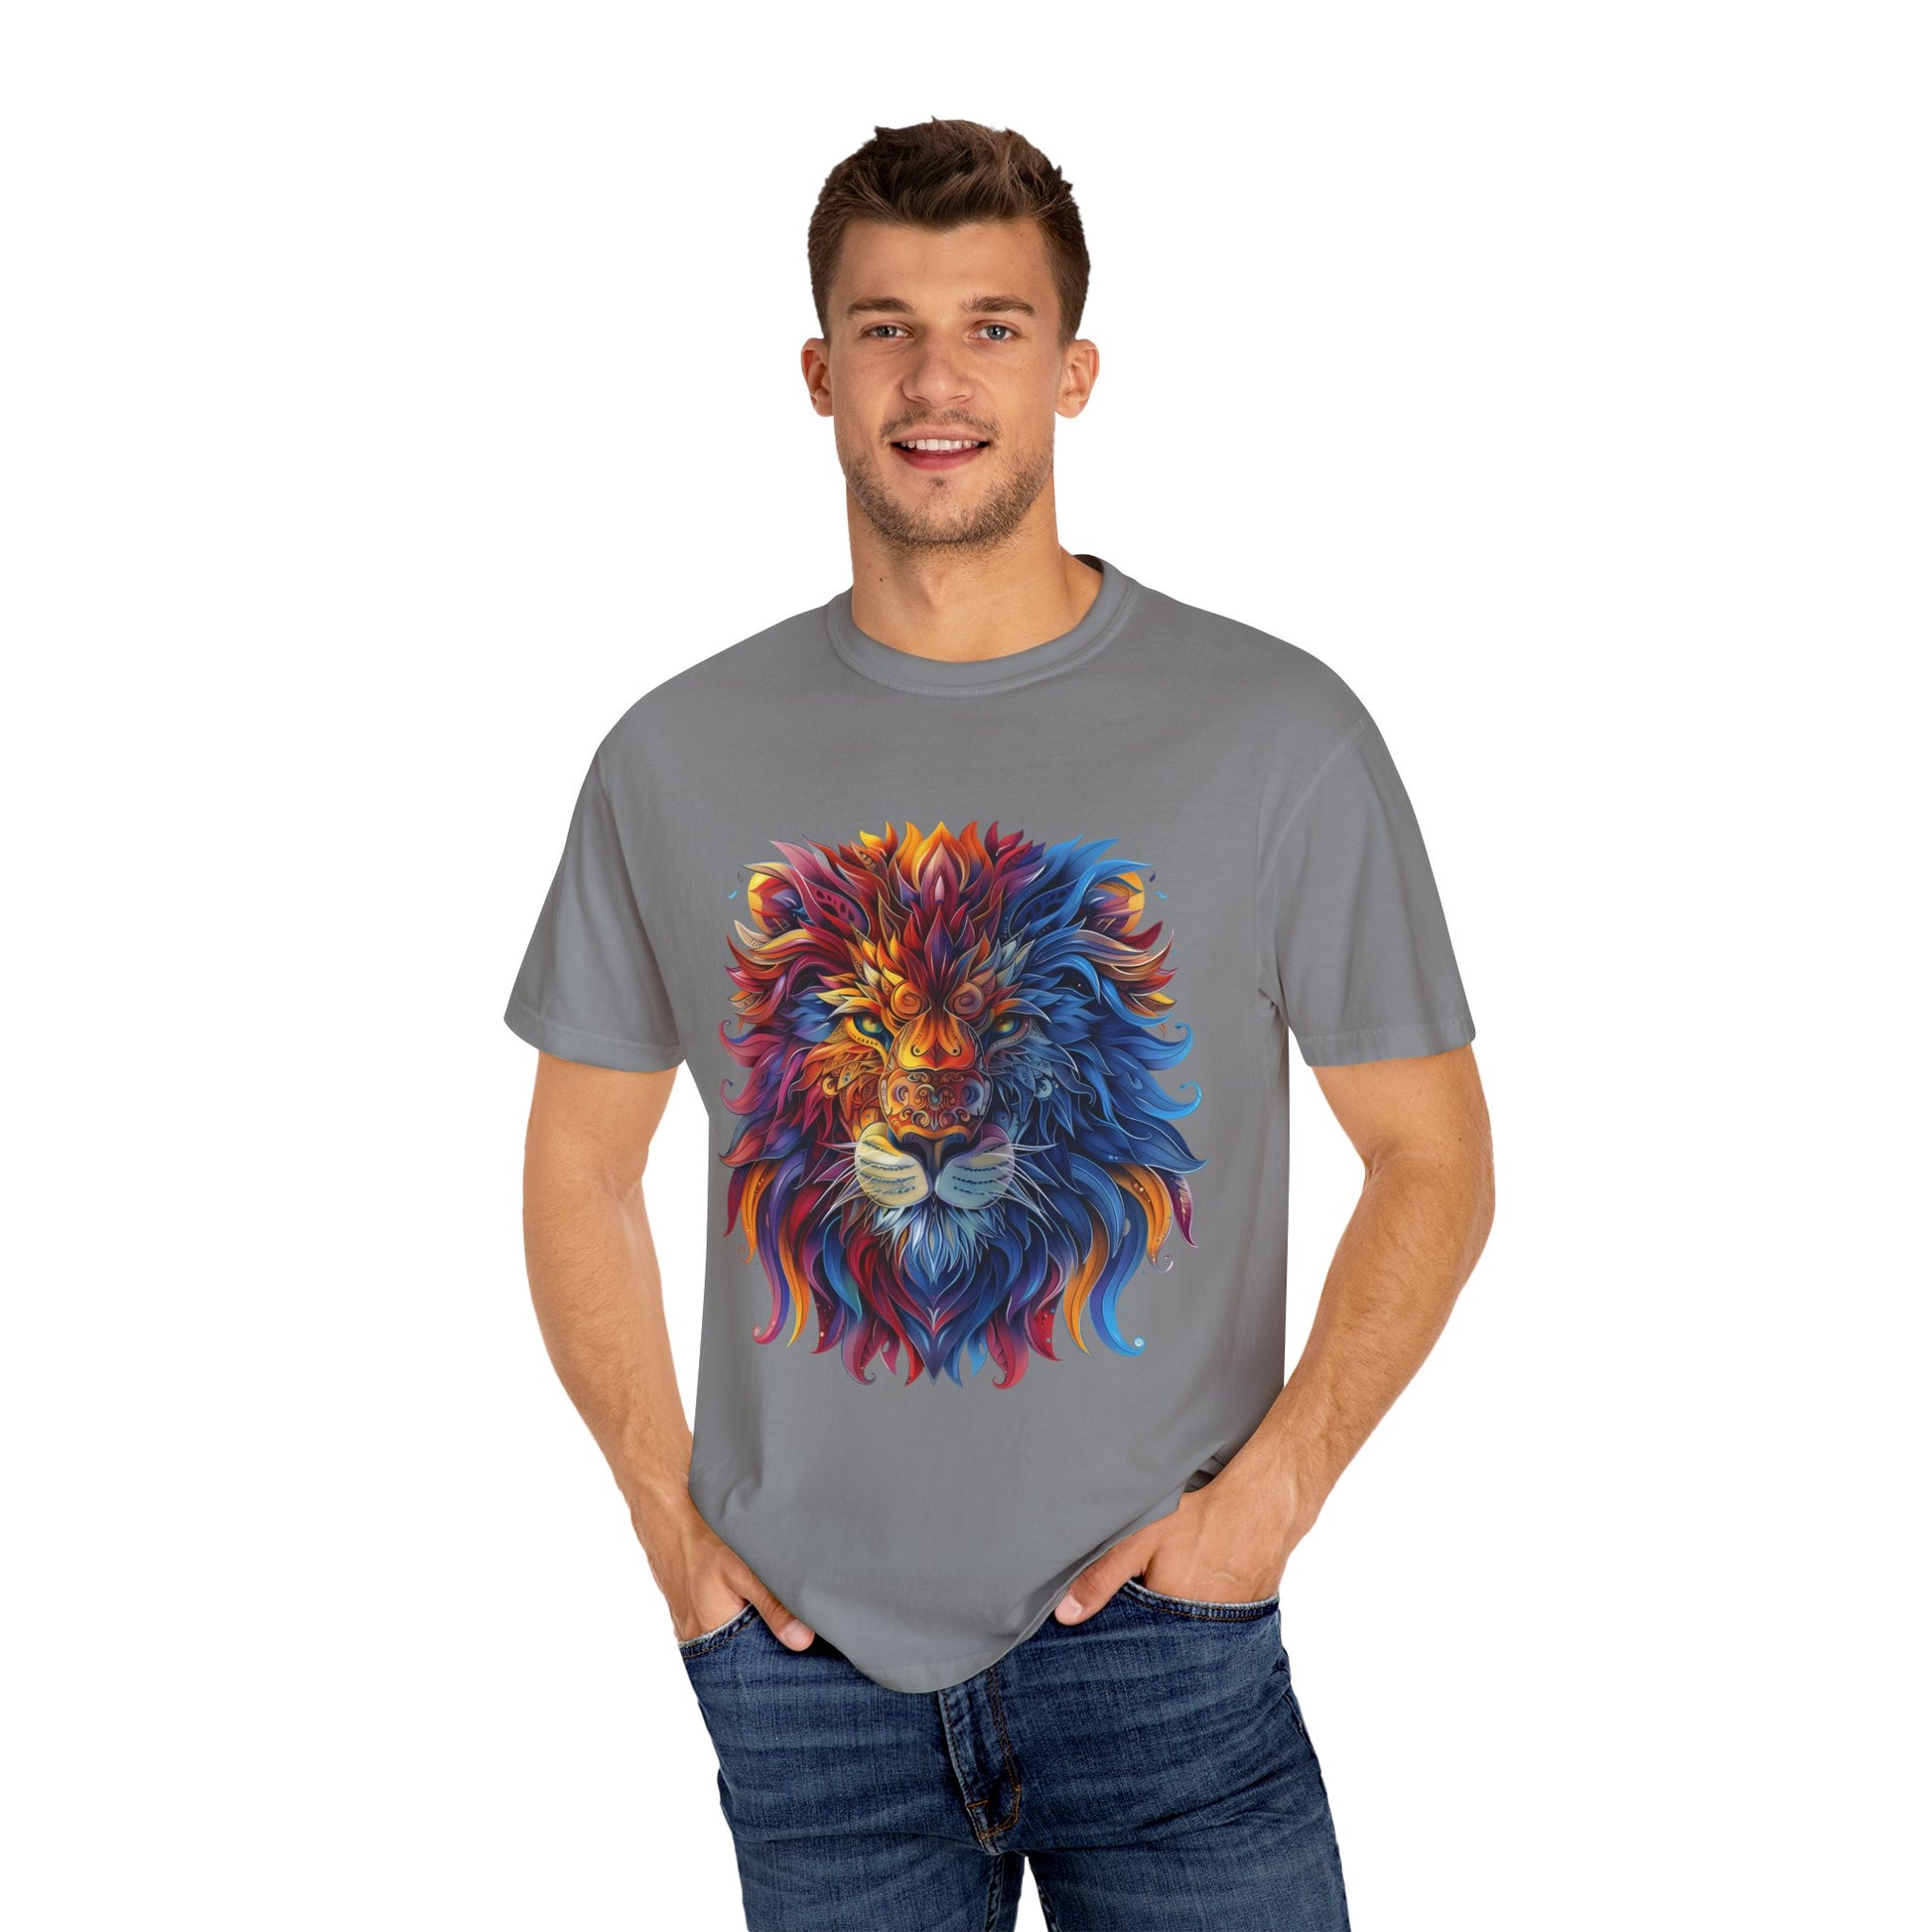 Lion Head Cool Graphic Design Novelty Unisex Garment-dyed T-shirt Cotton Funny Humorous Graphic Soft Premium Unisex Men Women Grey T-shirt Birthday Gift-42